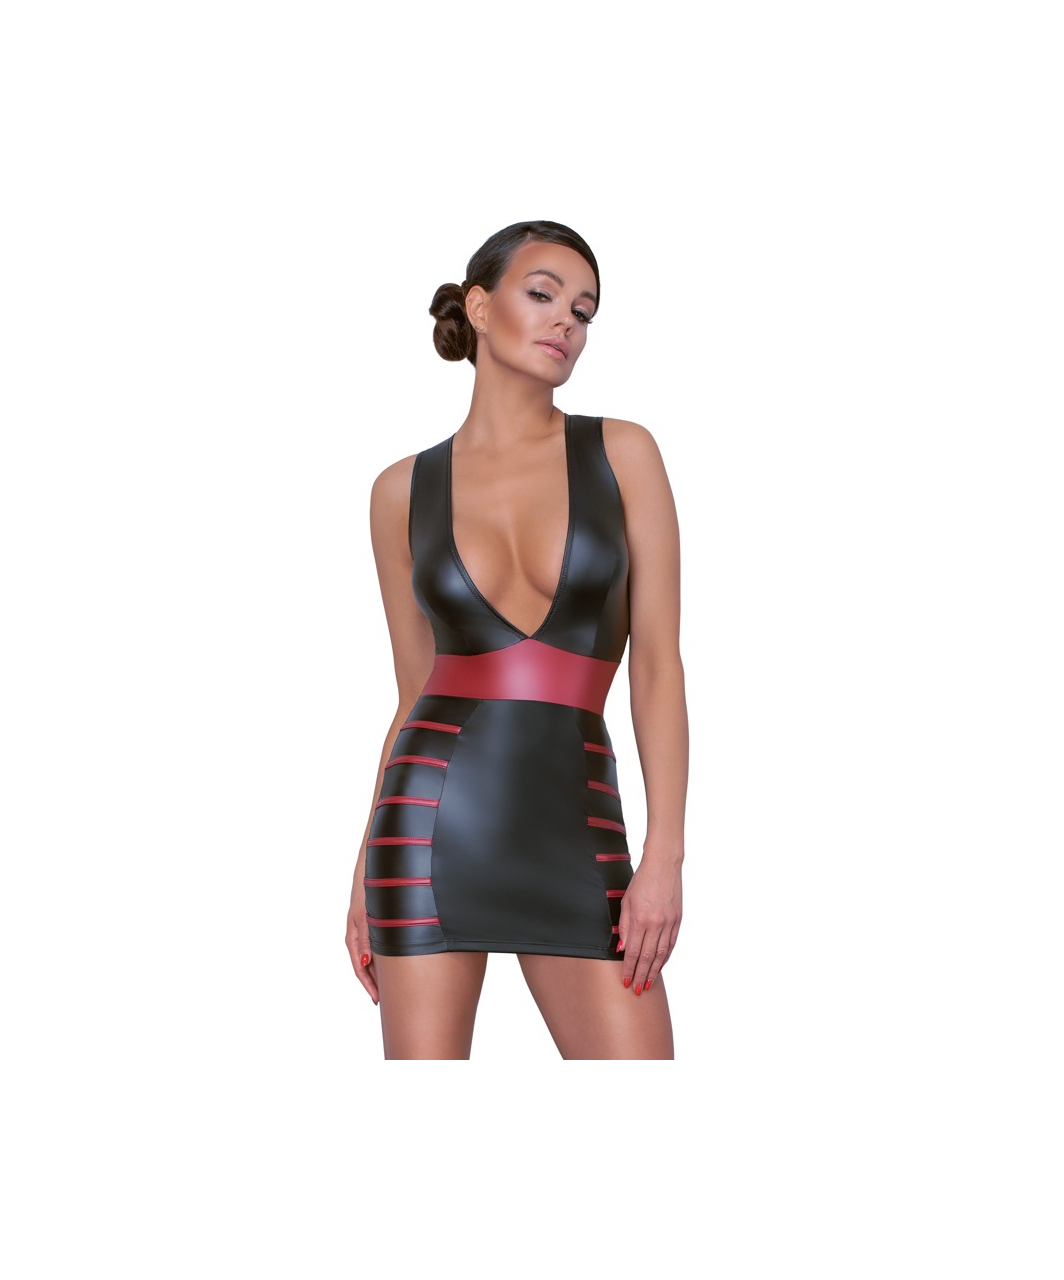 Cottelli Lingerie black matte look mini dress with red stripes